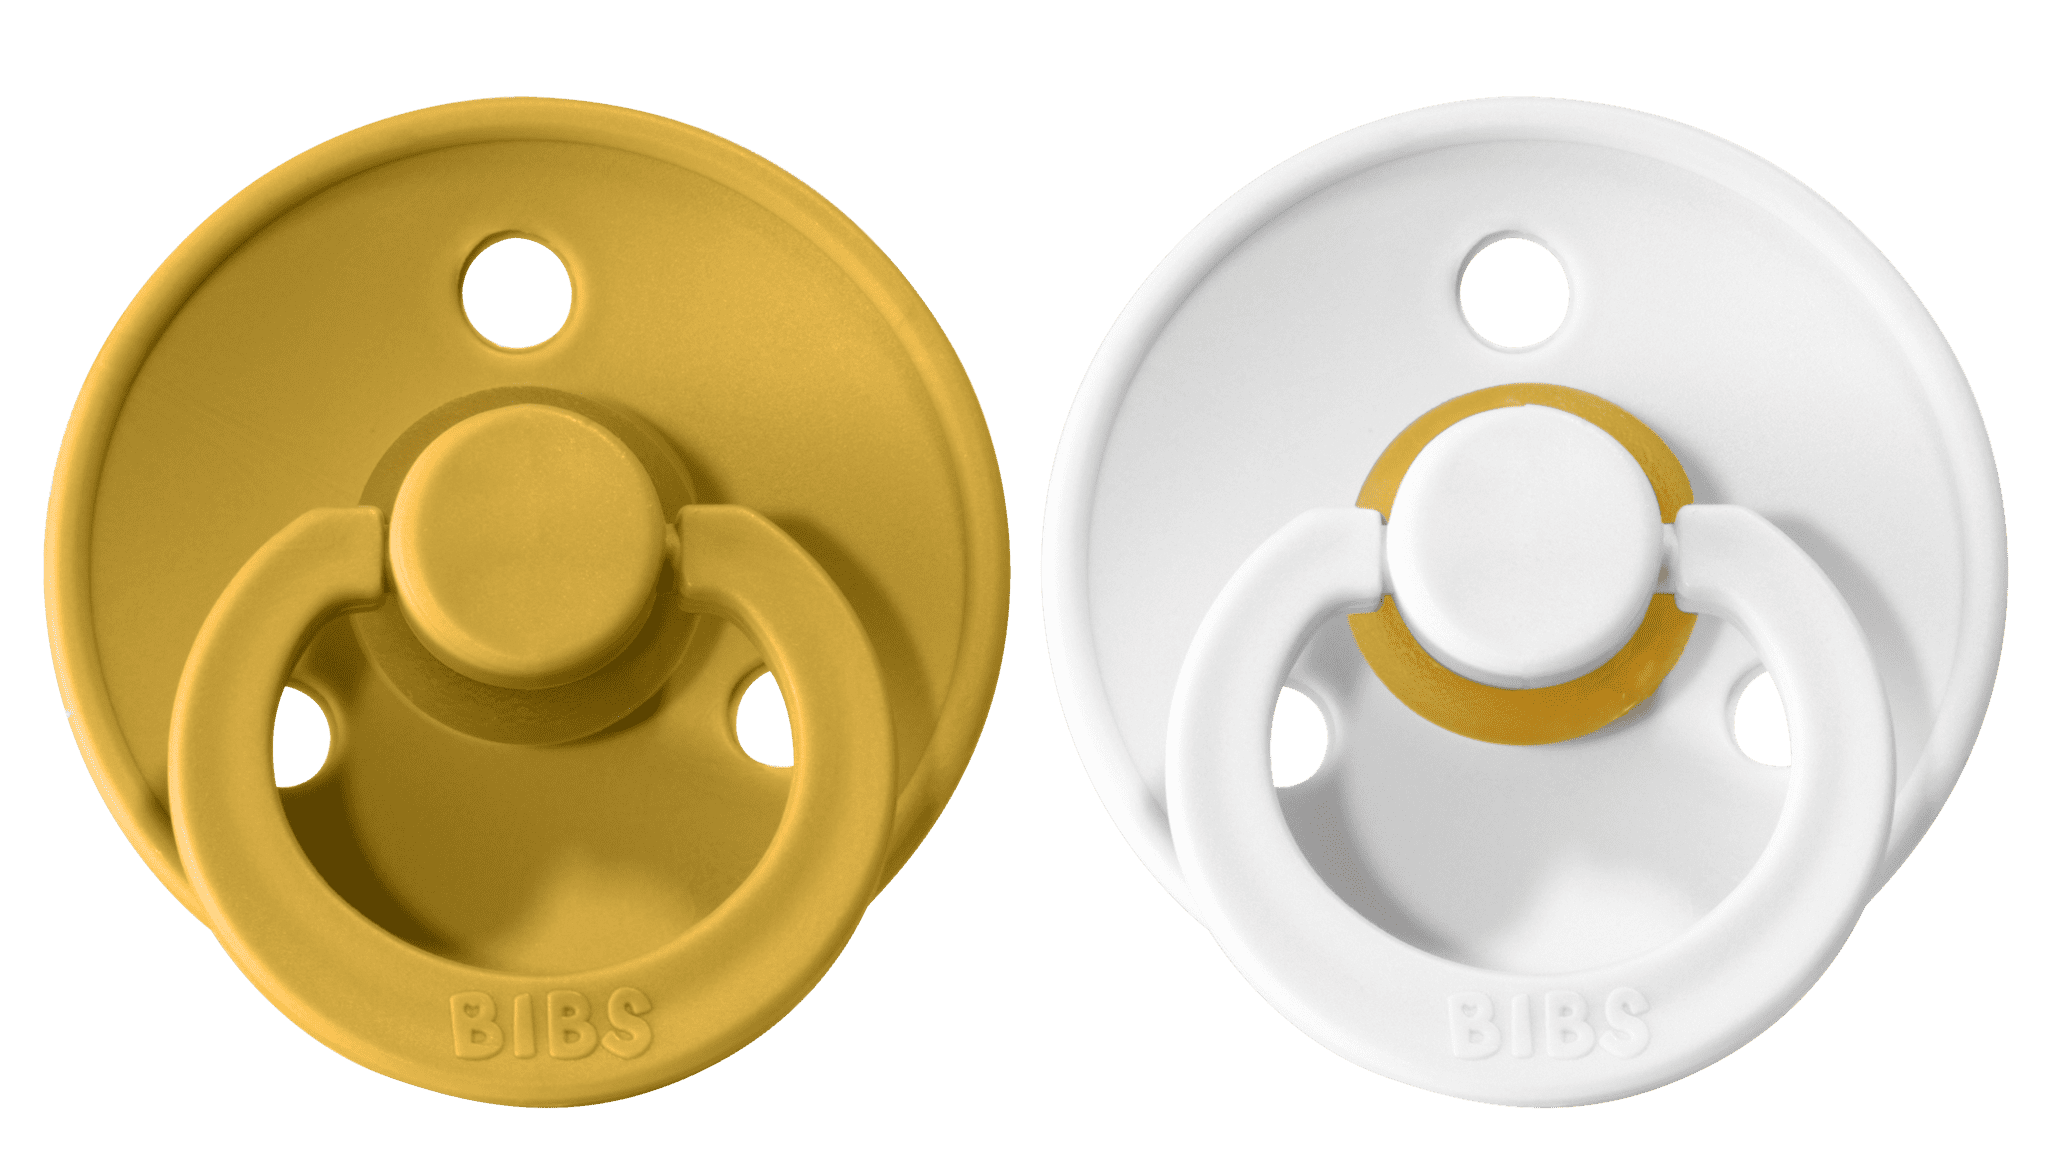 Bibs Fopspeen Duo Mustard/White 0-6